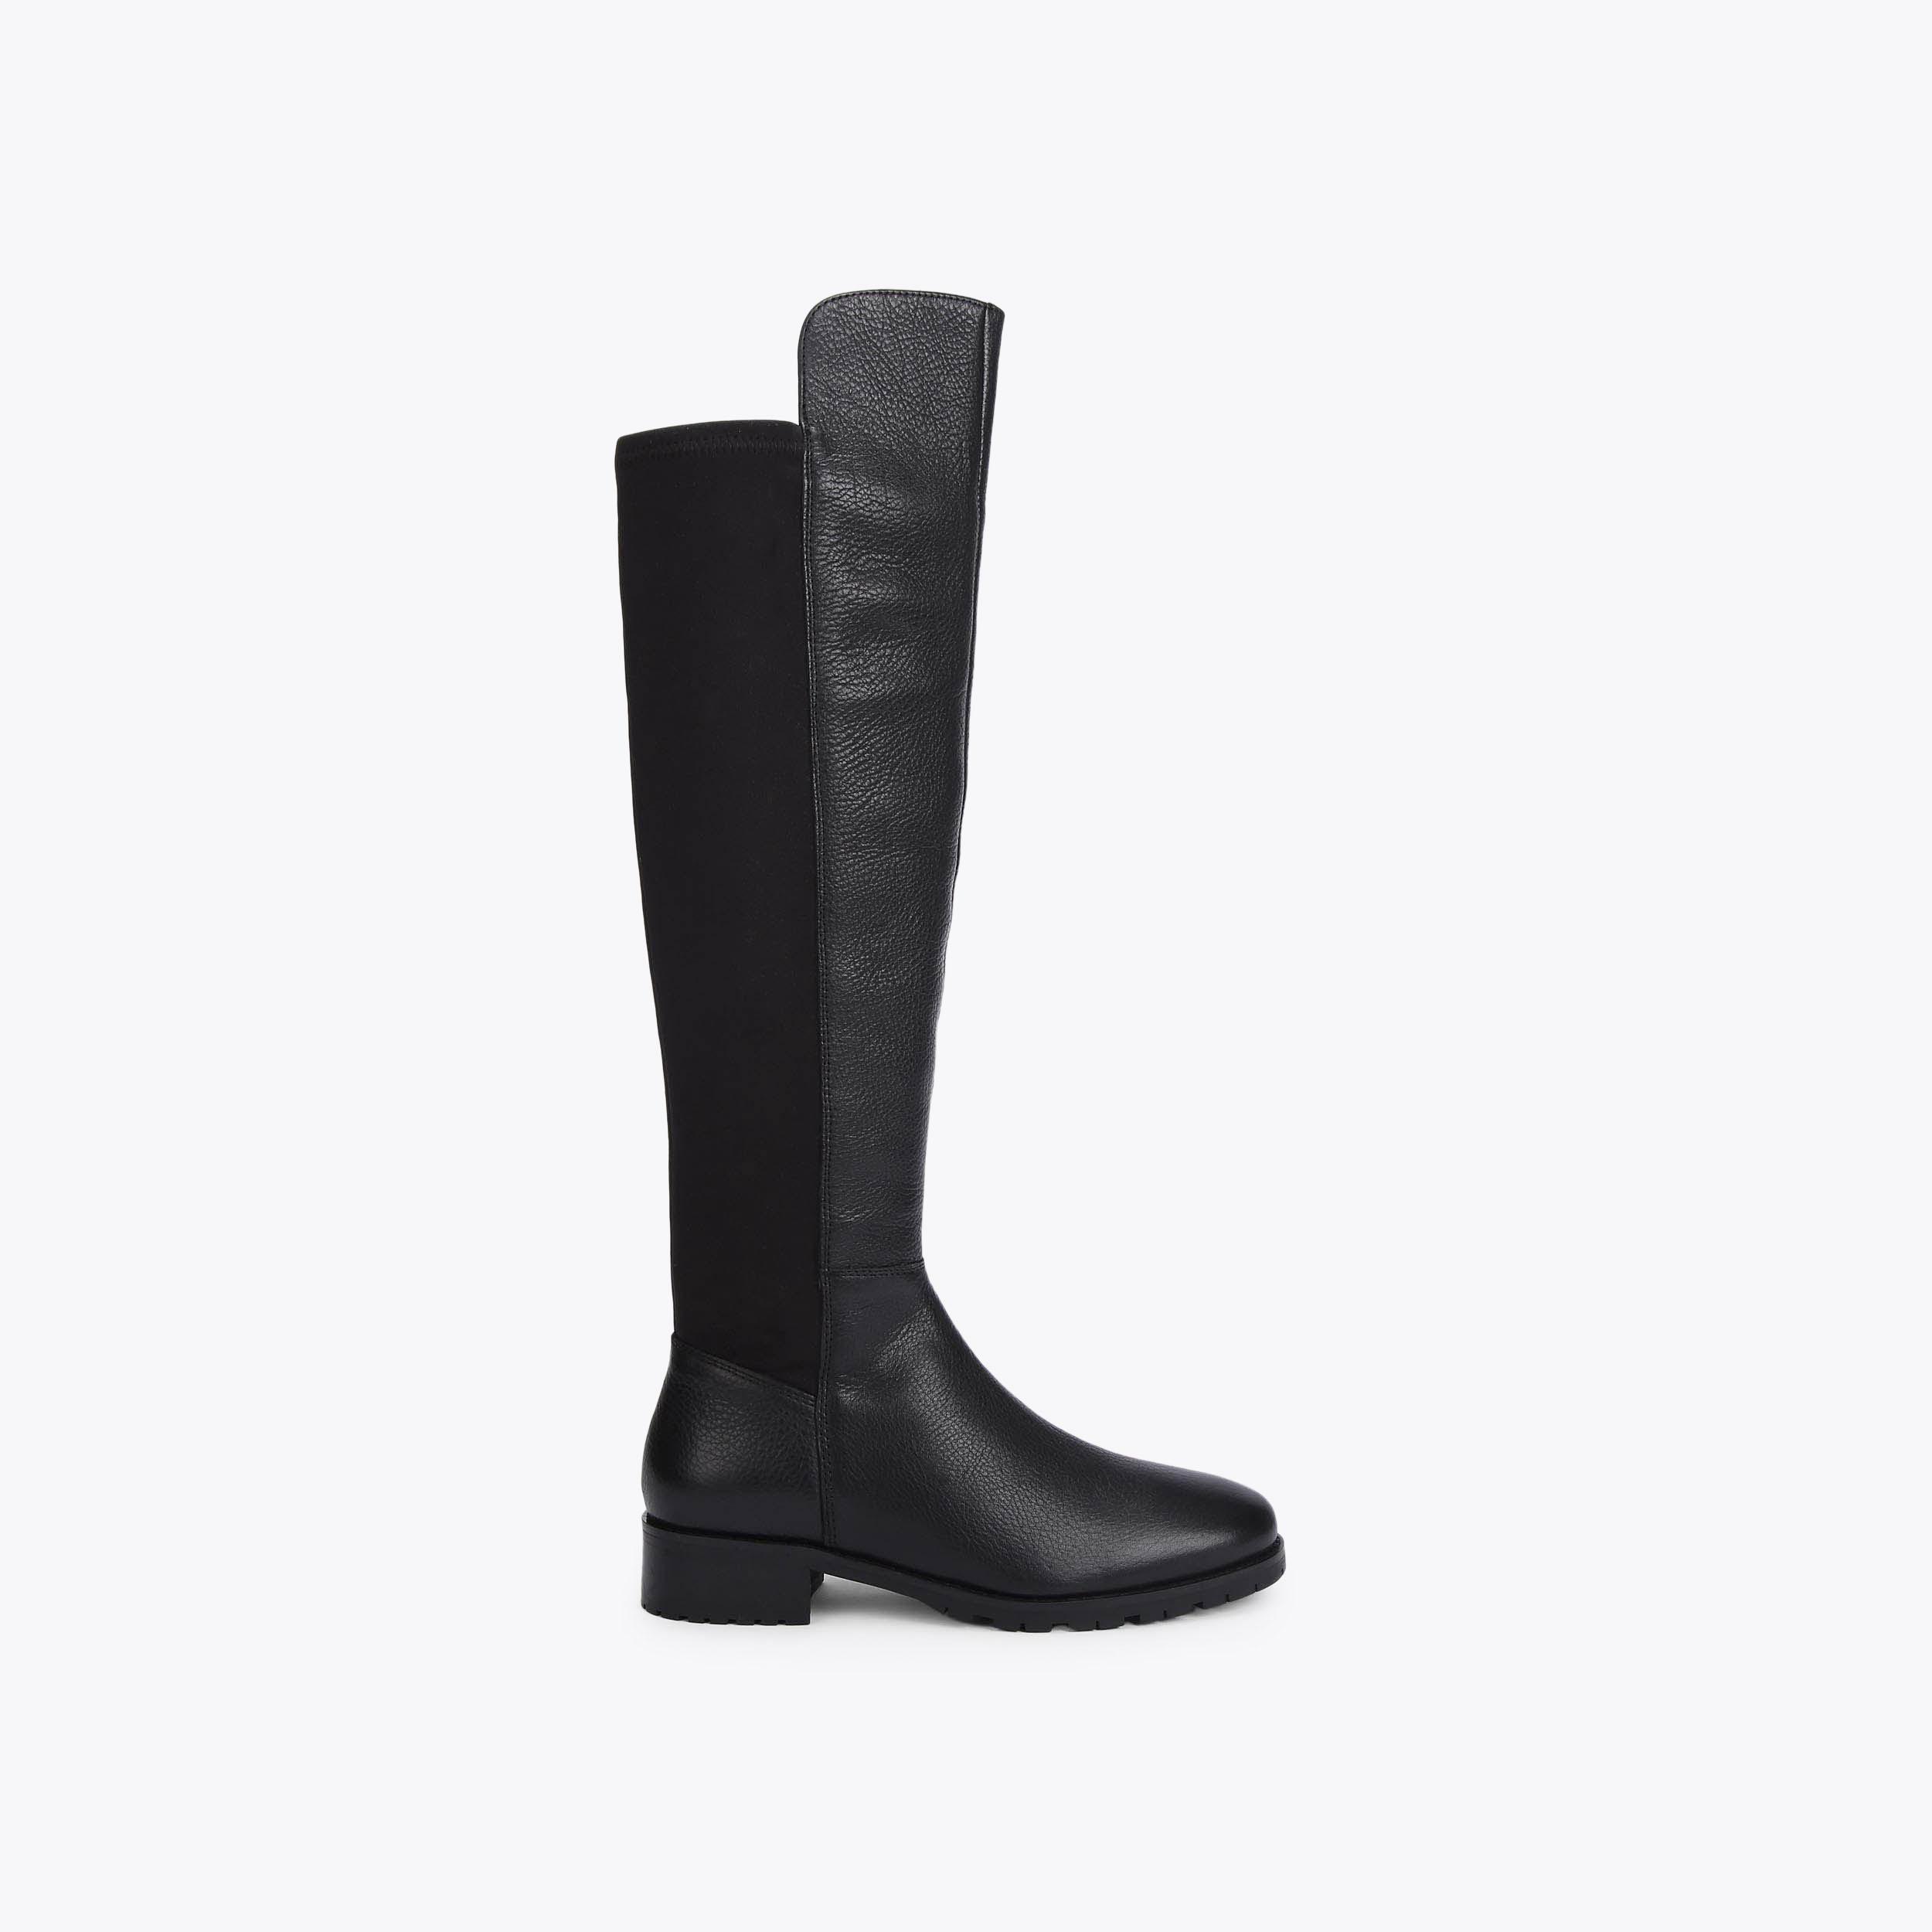 VANESSA 2 Black Leather High Leg Boots by CARVELA COMFORT